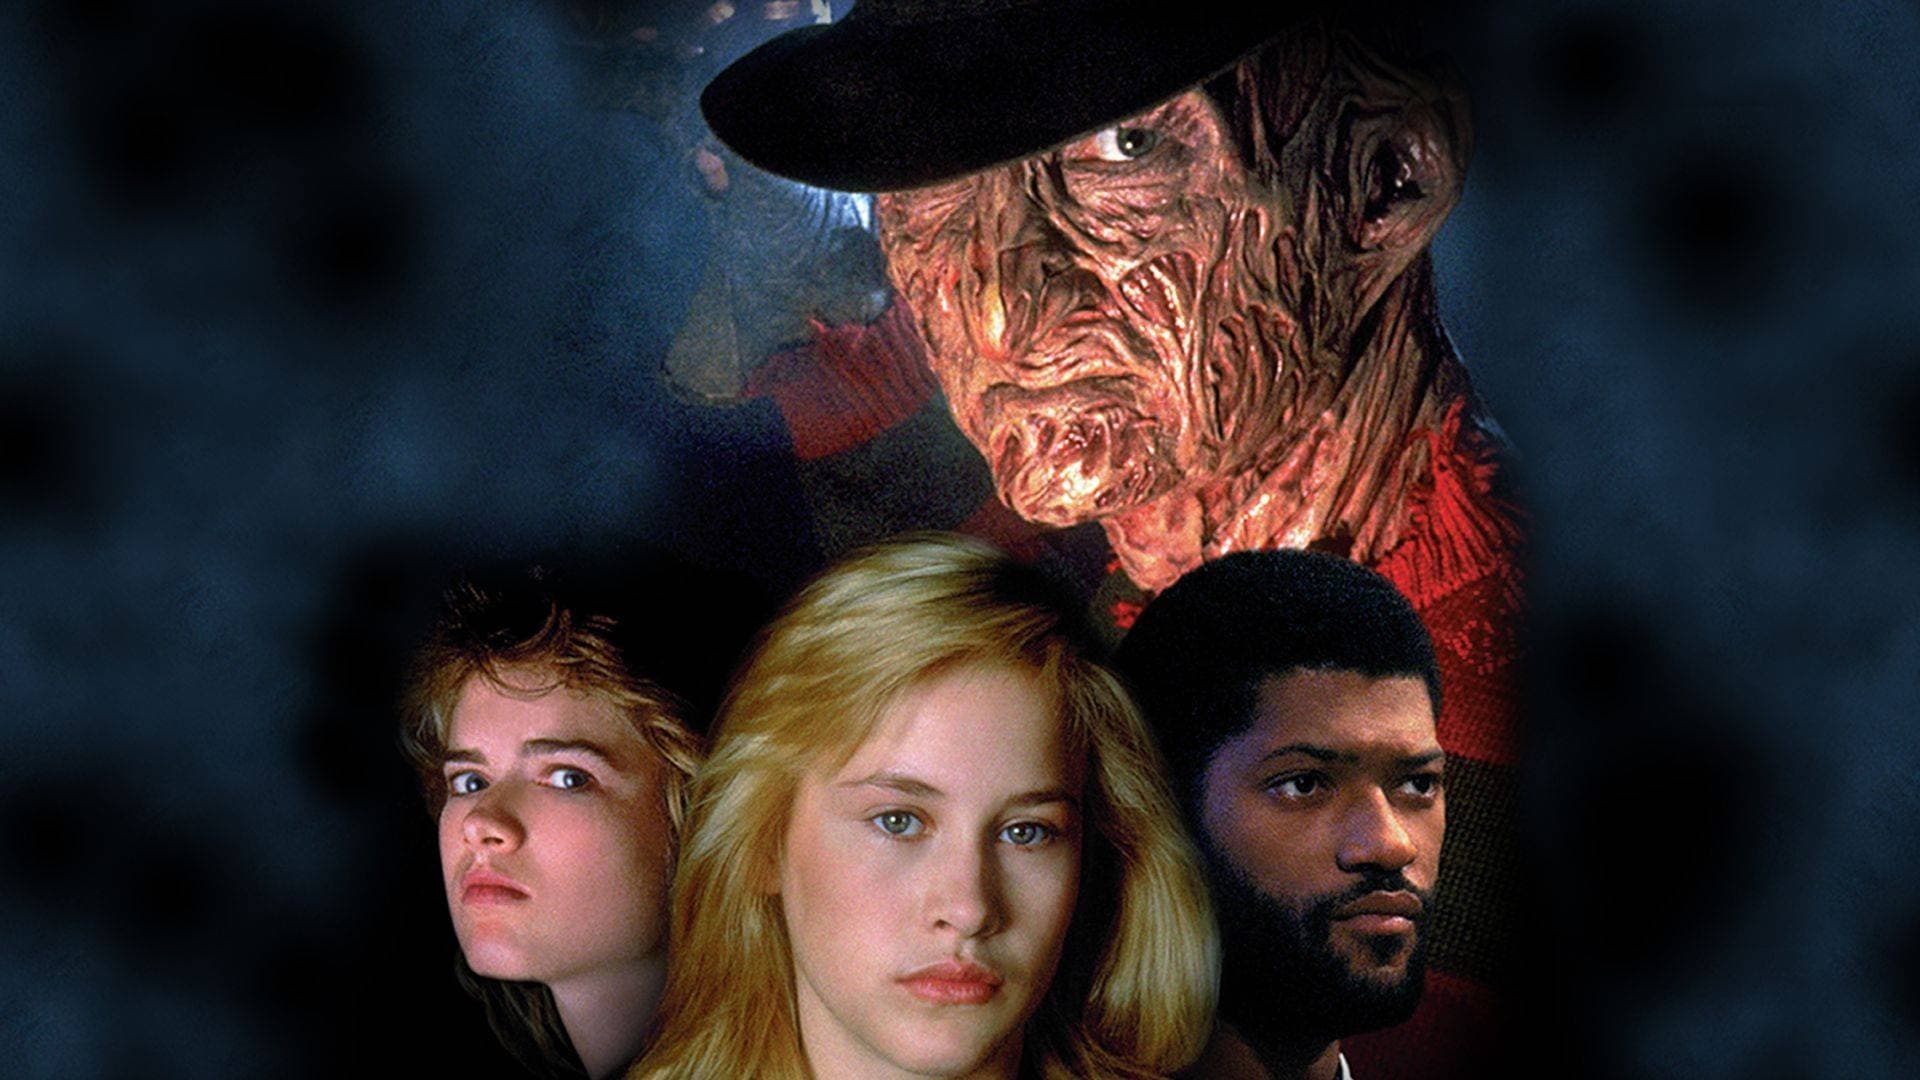 دانلود فیلم A Nightmare on Elm Street 3: Dream Warriors 1987